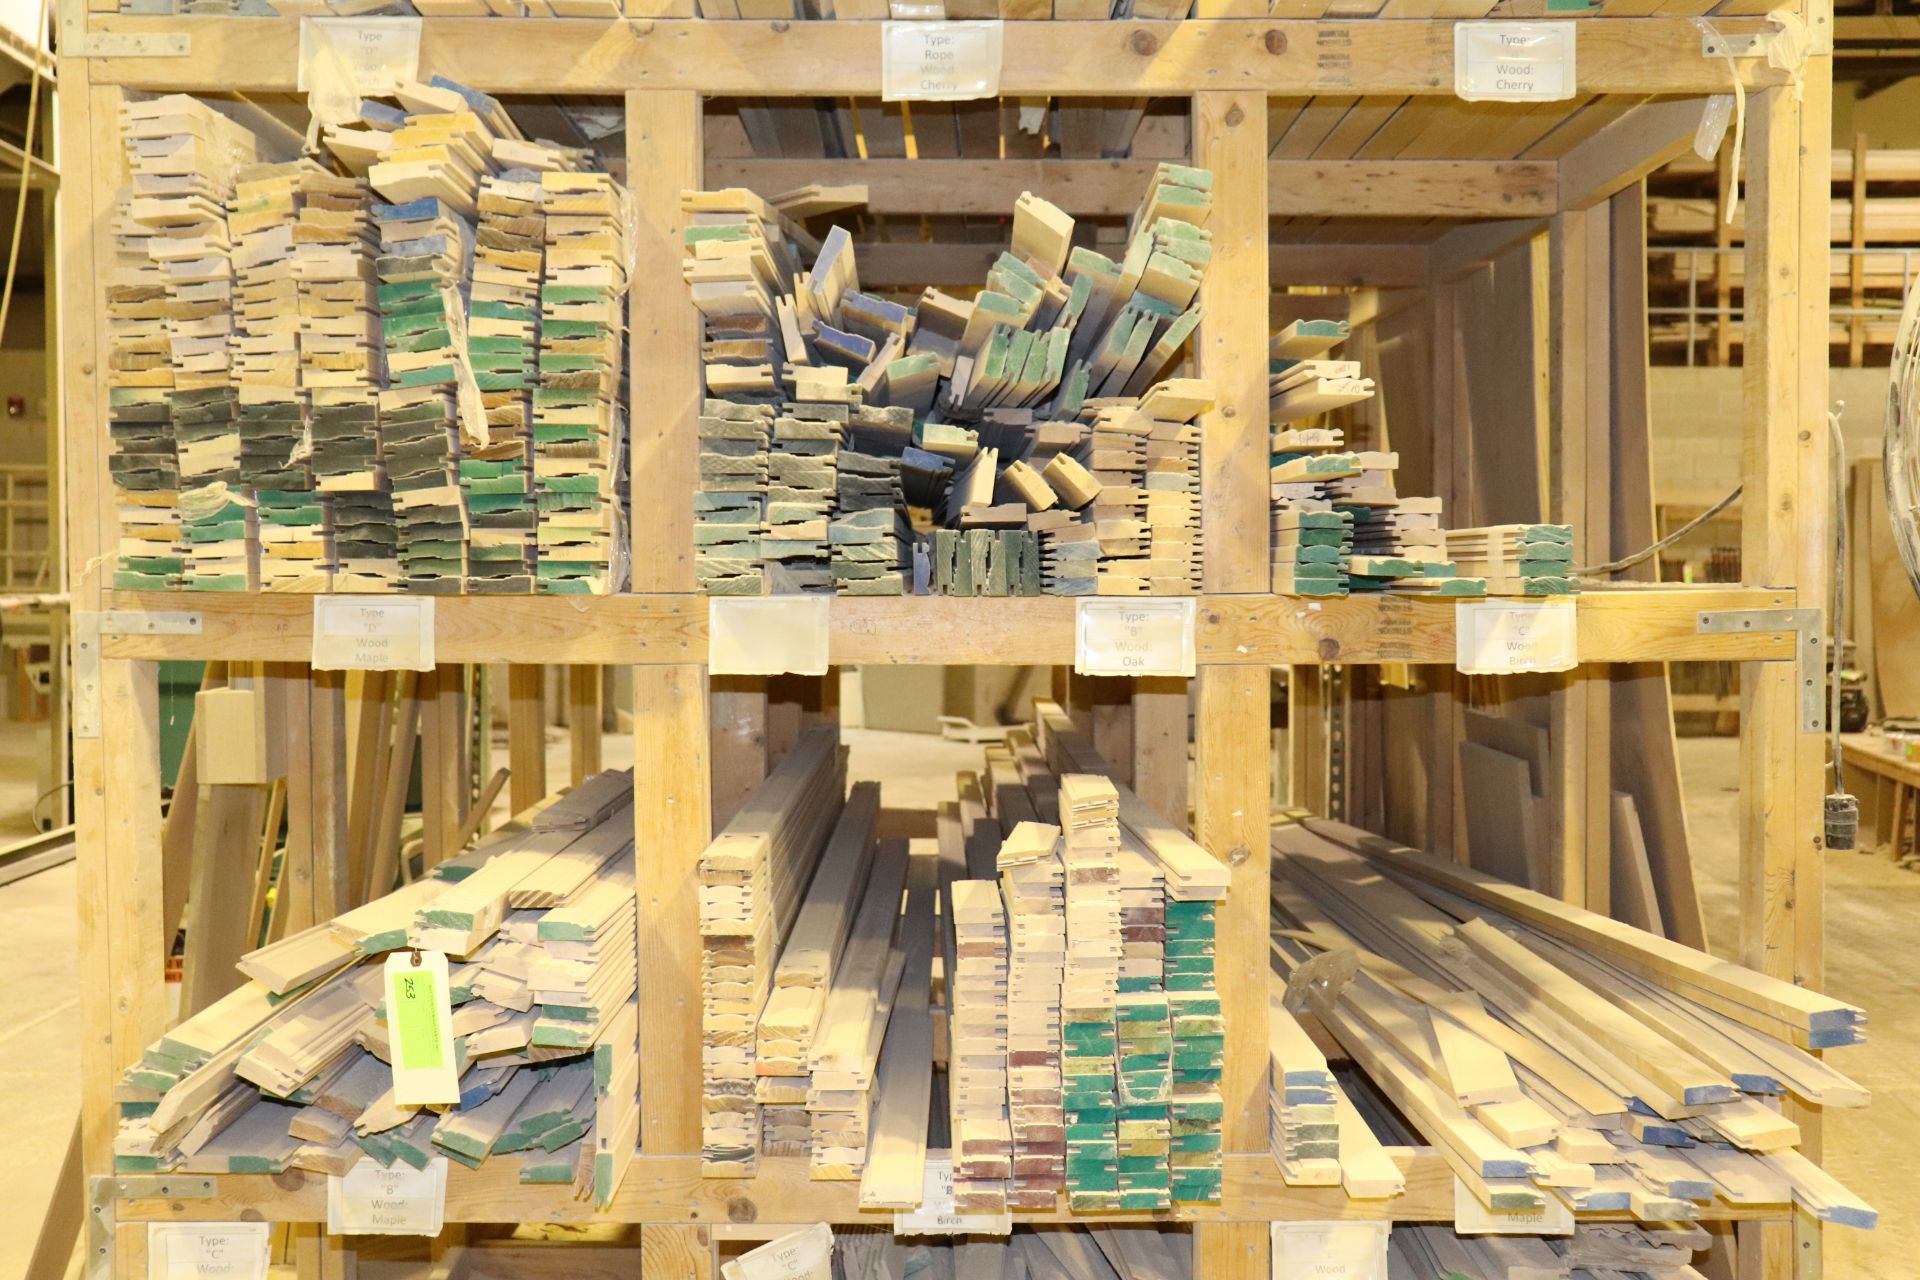 Contents of storage shelfs. Cheery, Birch, Knotty Alder, etc - Image 3 of 9